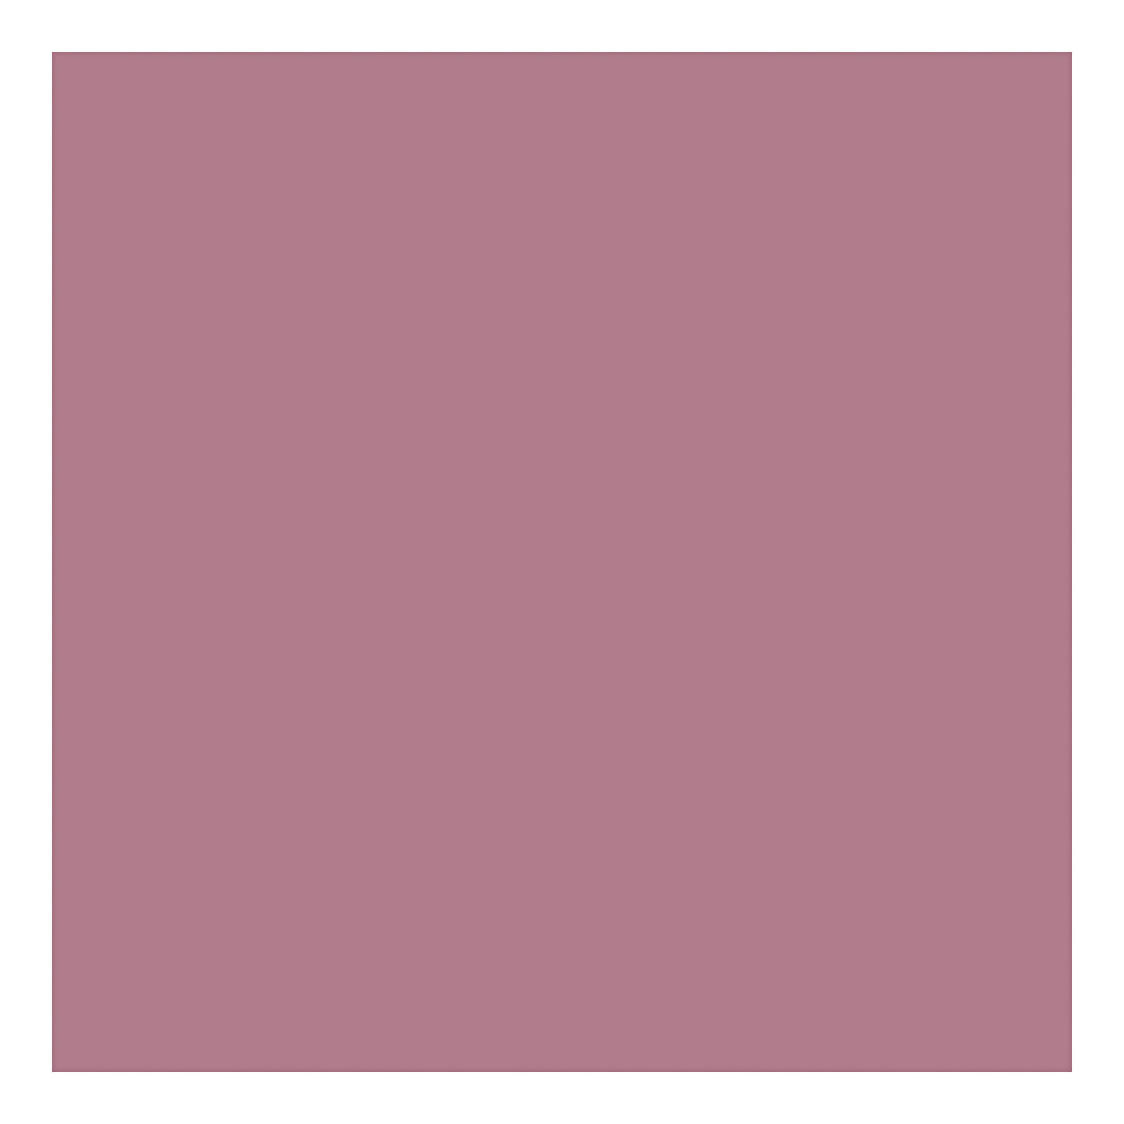 Textilfarbe – Dunkelrosa, 500 ml